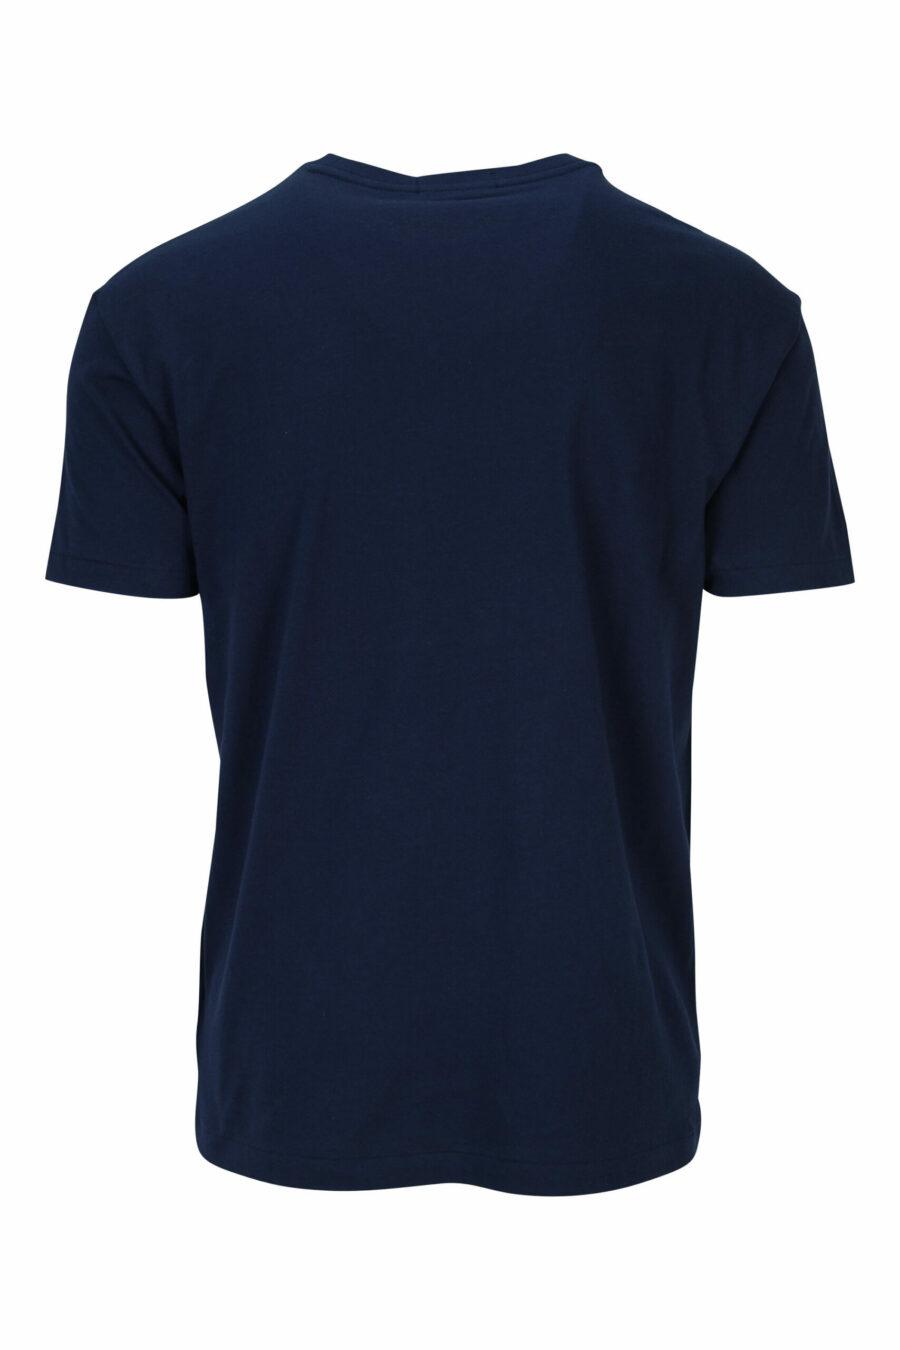 T-shirt azul escura com maxilogo "polo" branco - 3616535909311 1 à escala